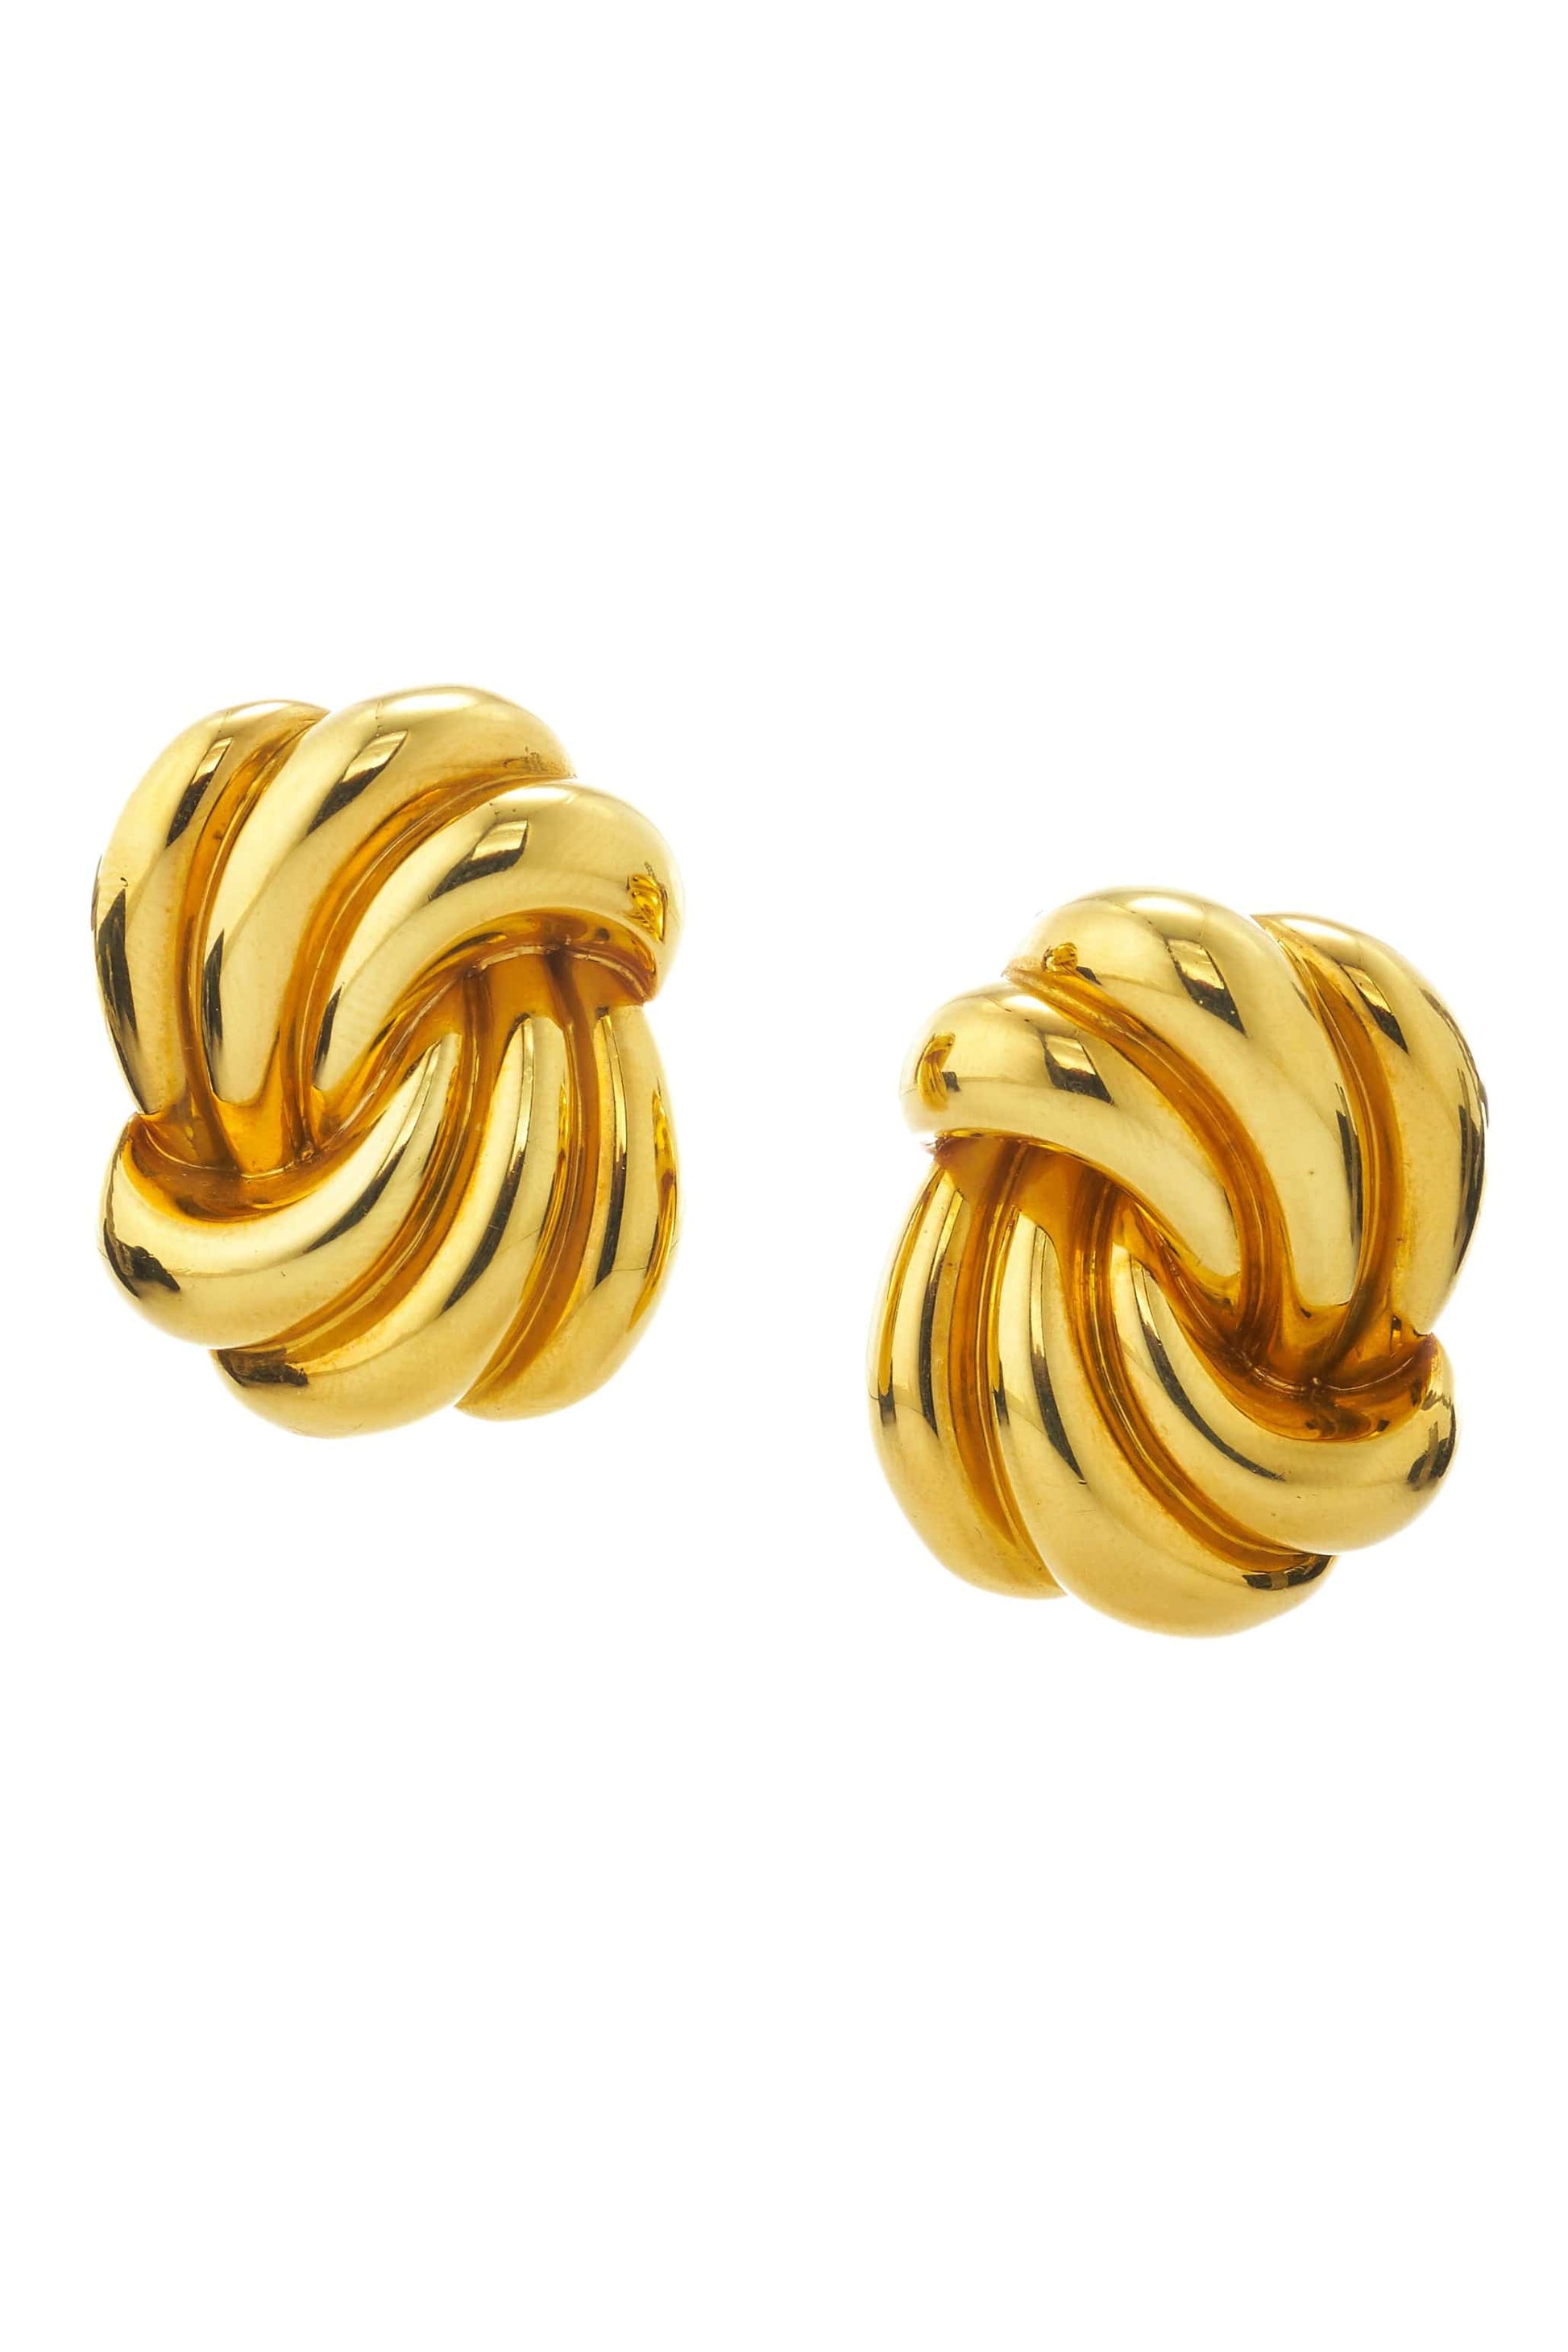 DAVID WEBB-Knot Earrings-YELLOW GOLD